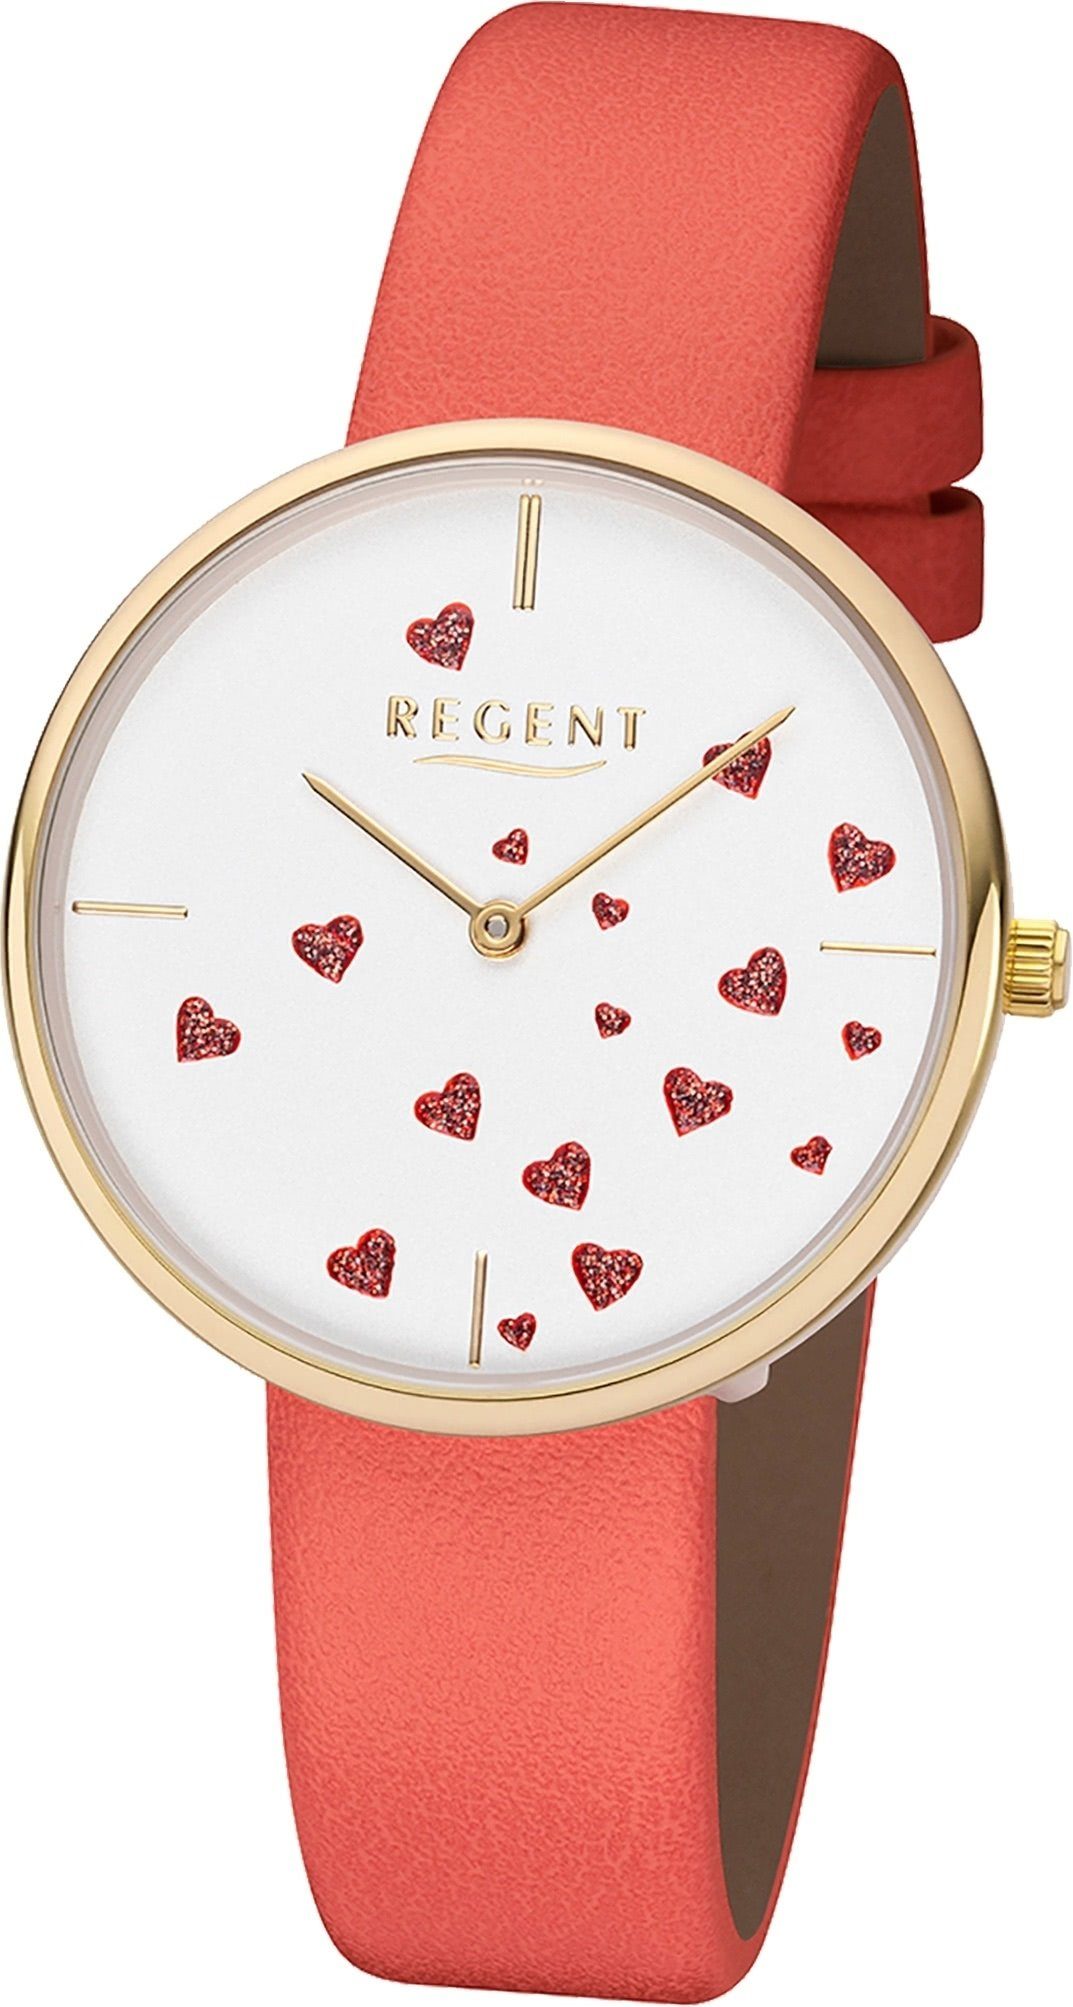 Regent Quarzuhr Regent Leder Damen Uhr BA-609 Armbanduhr, Damenuhr Lederarmband rot, rundes Gehäuse, mittel (ca. 36mm)